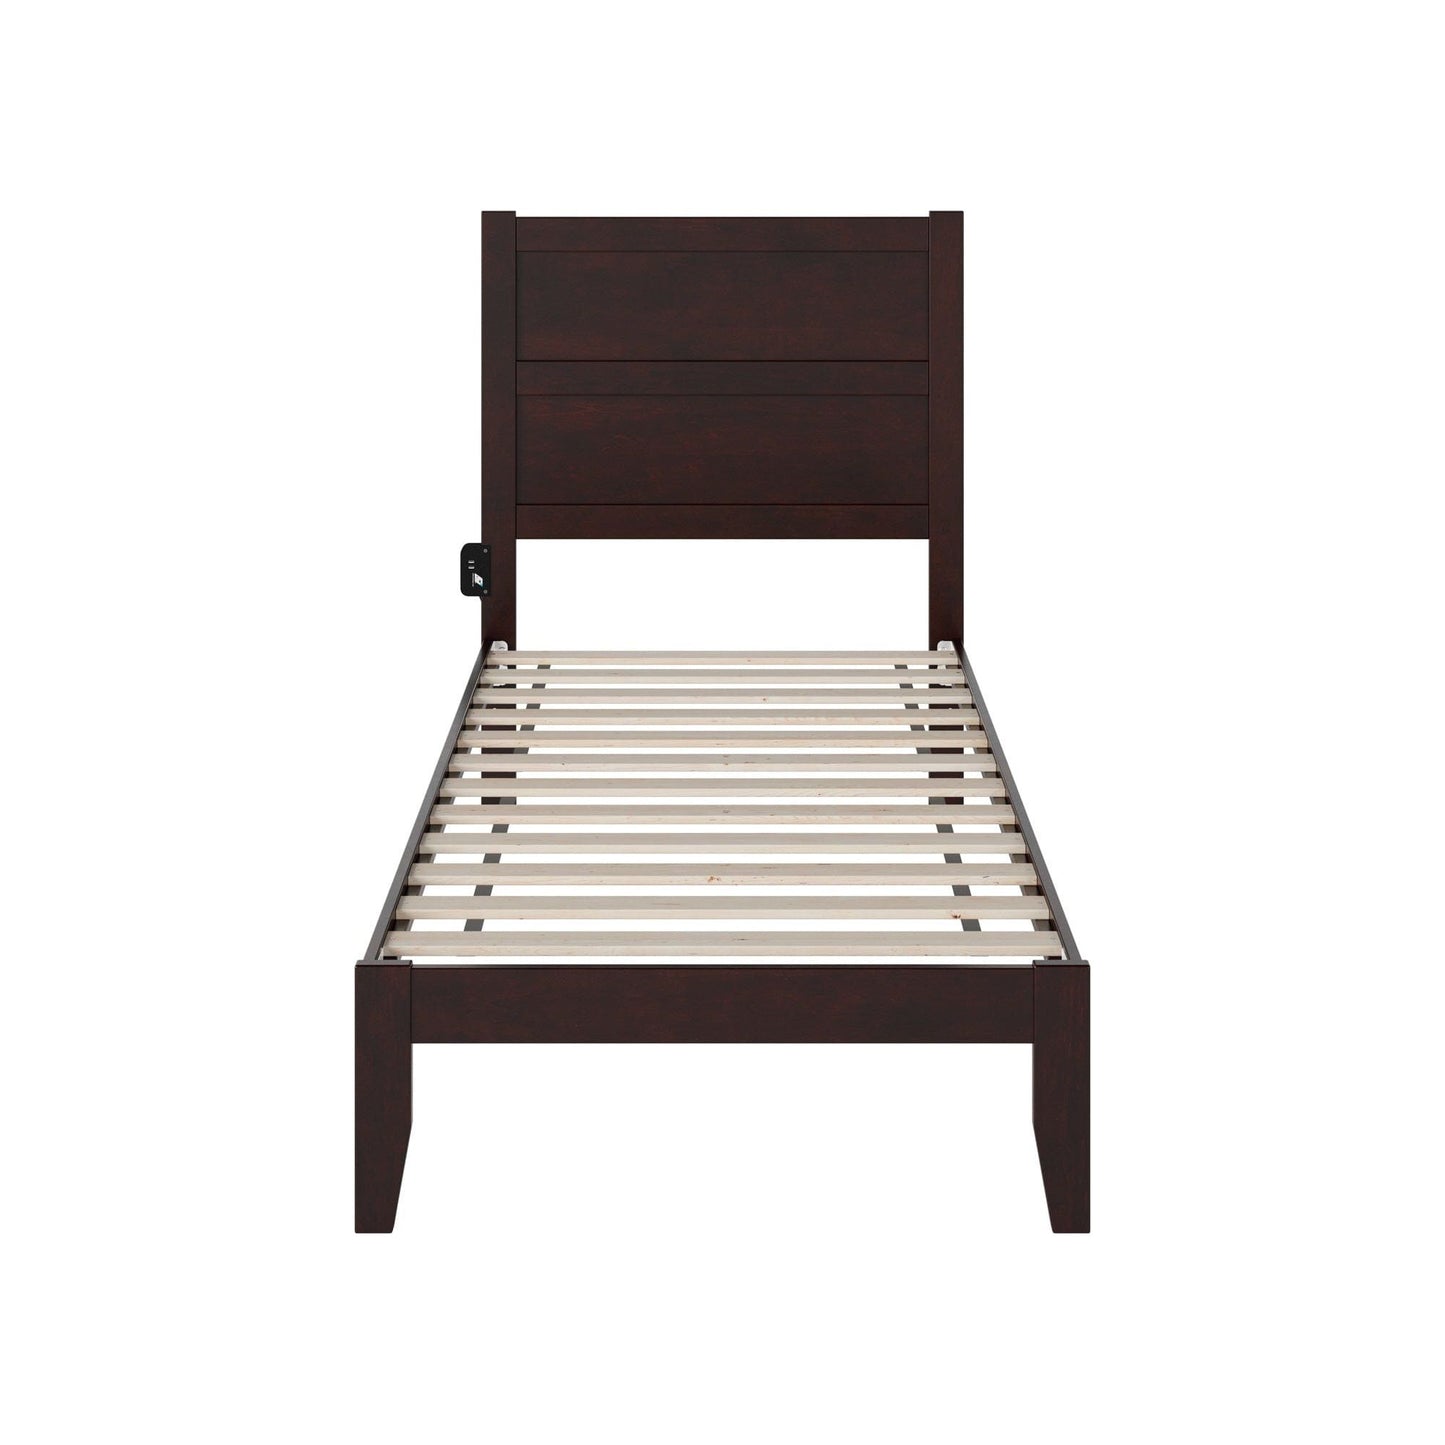 AFI Furnishings NoHo Twin Bed in Espresso AG9110021